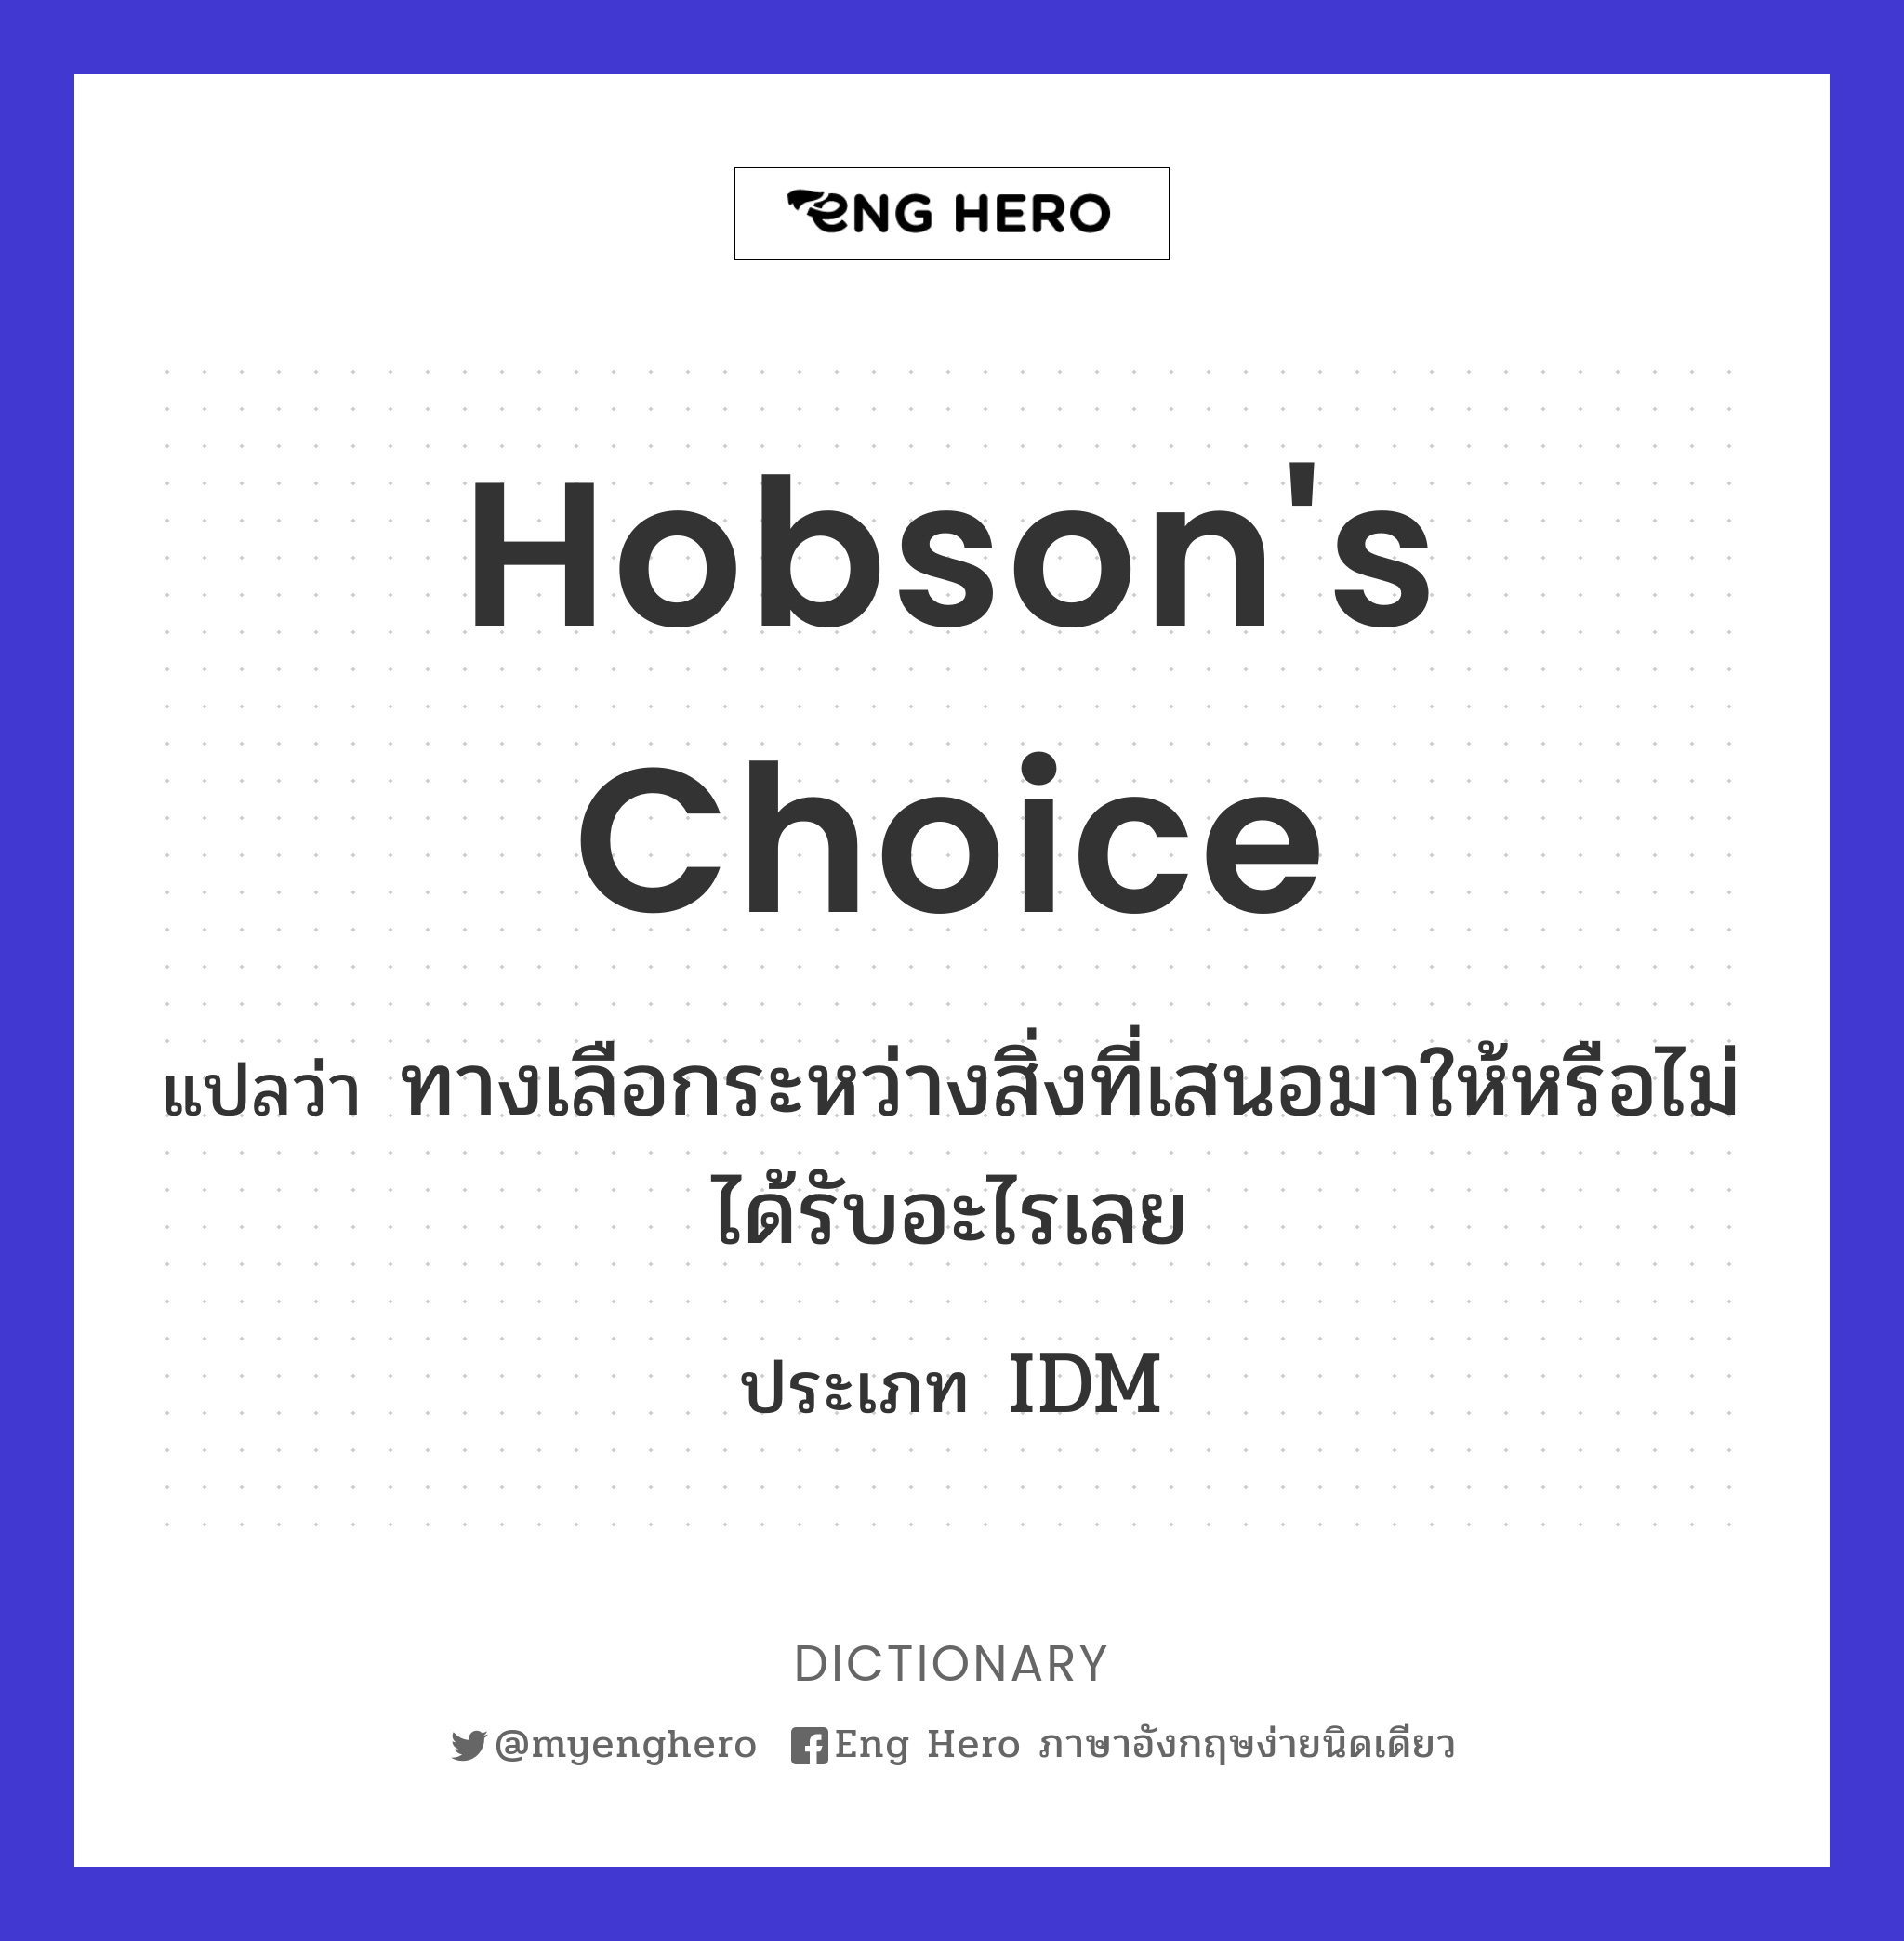 Hobson's choice